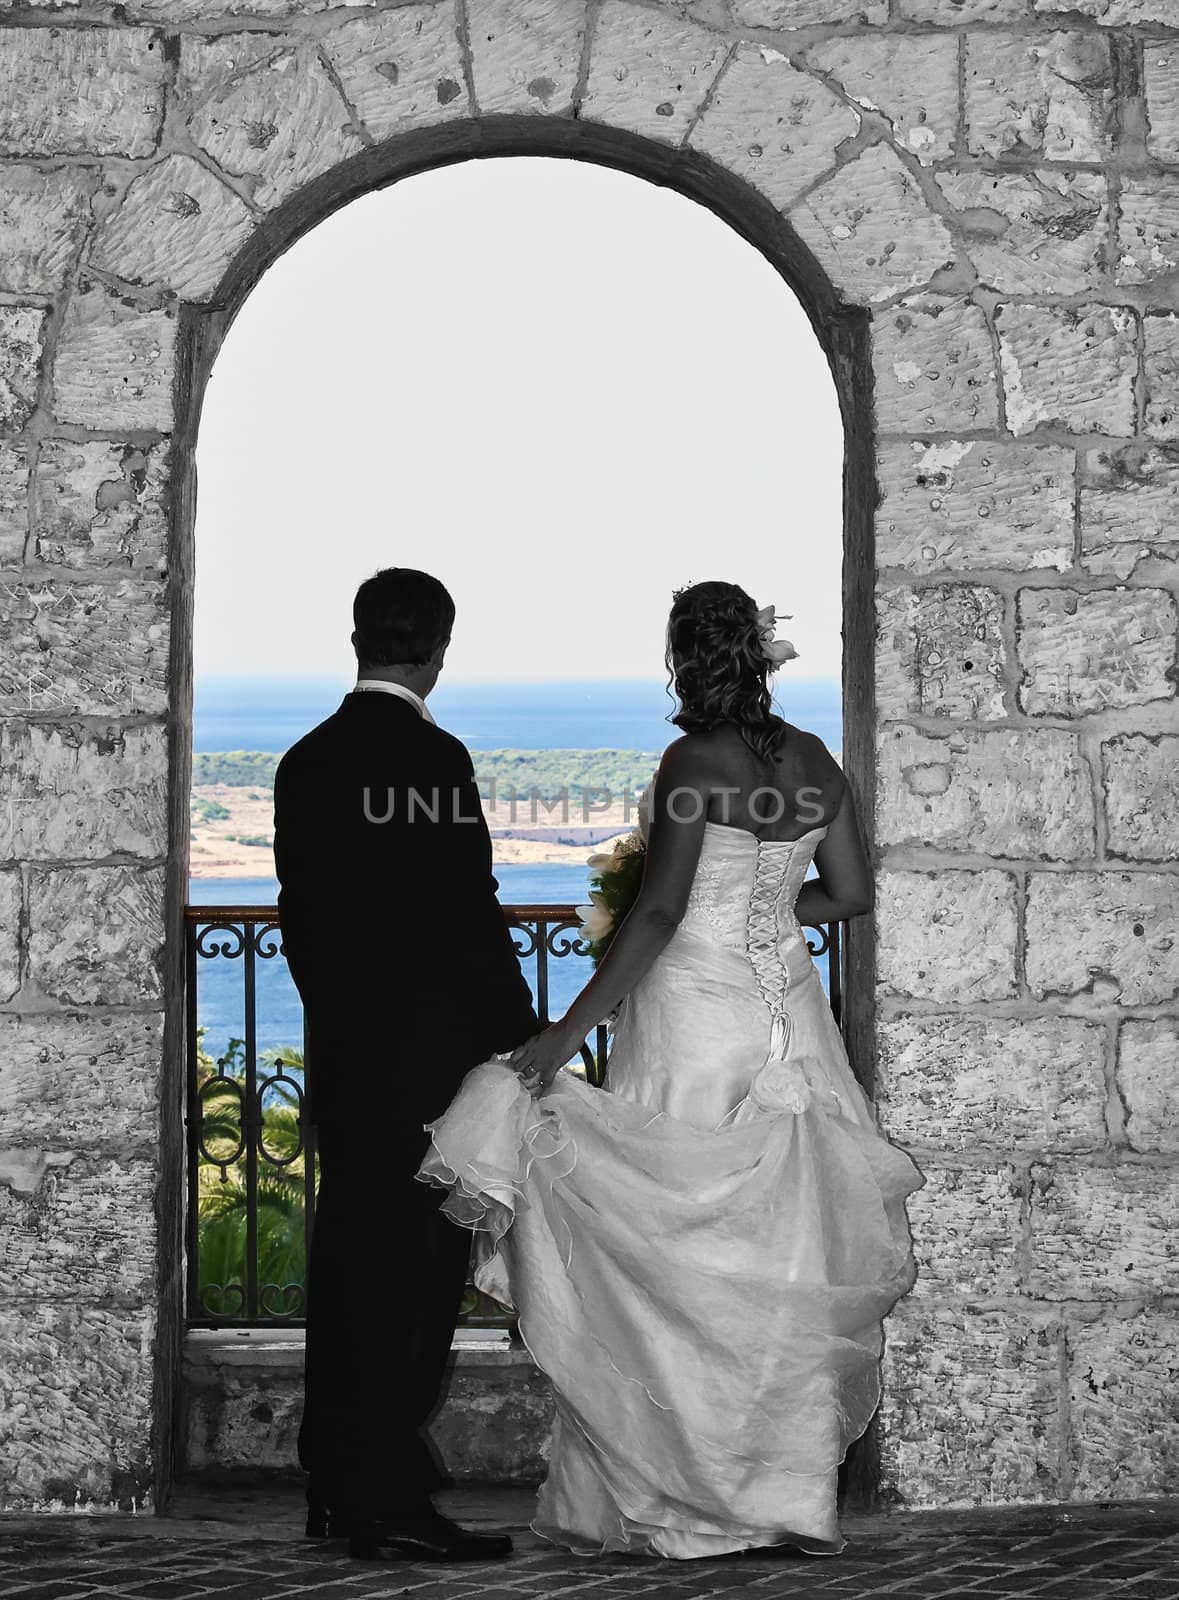 A newly wed couple enjoying scenery in Malta